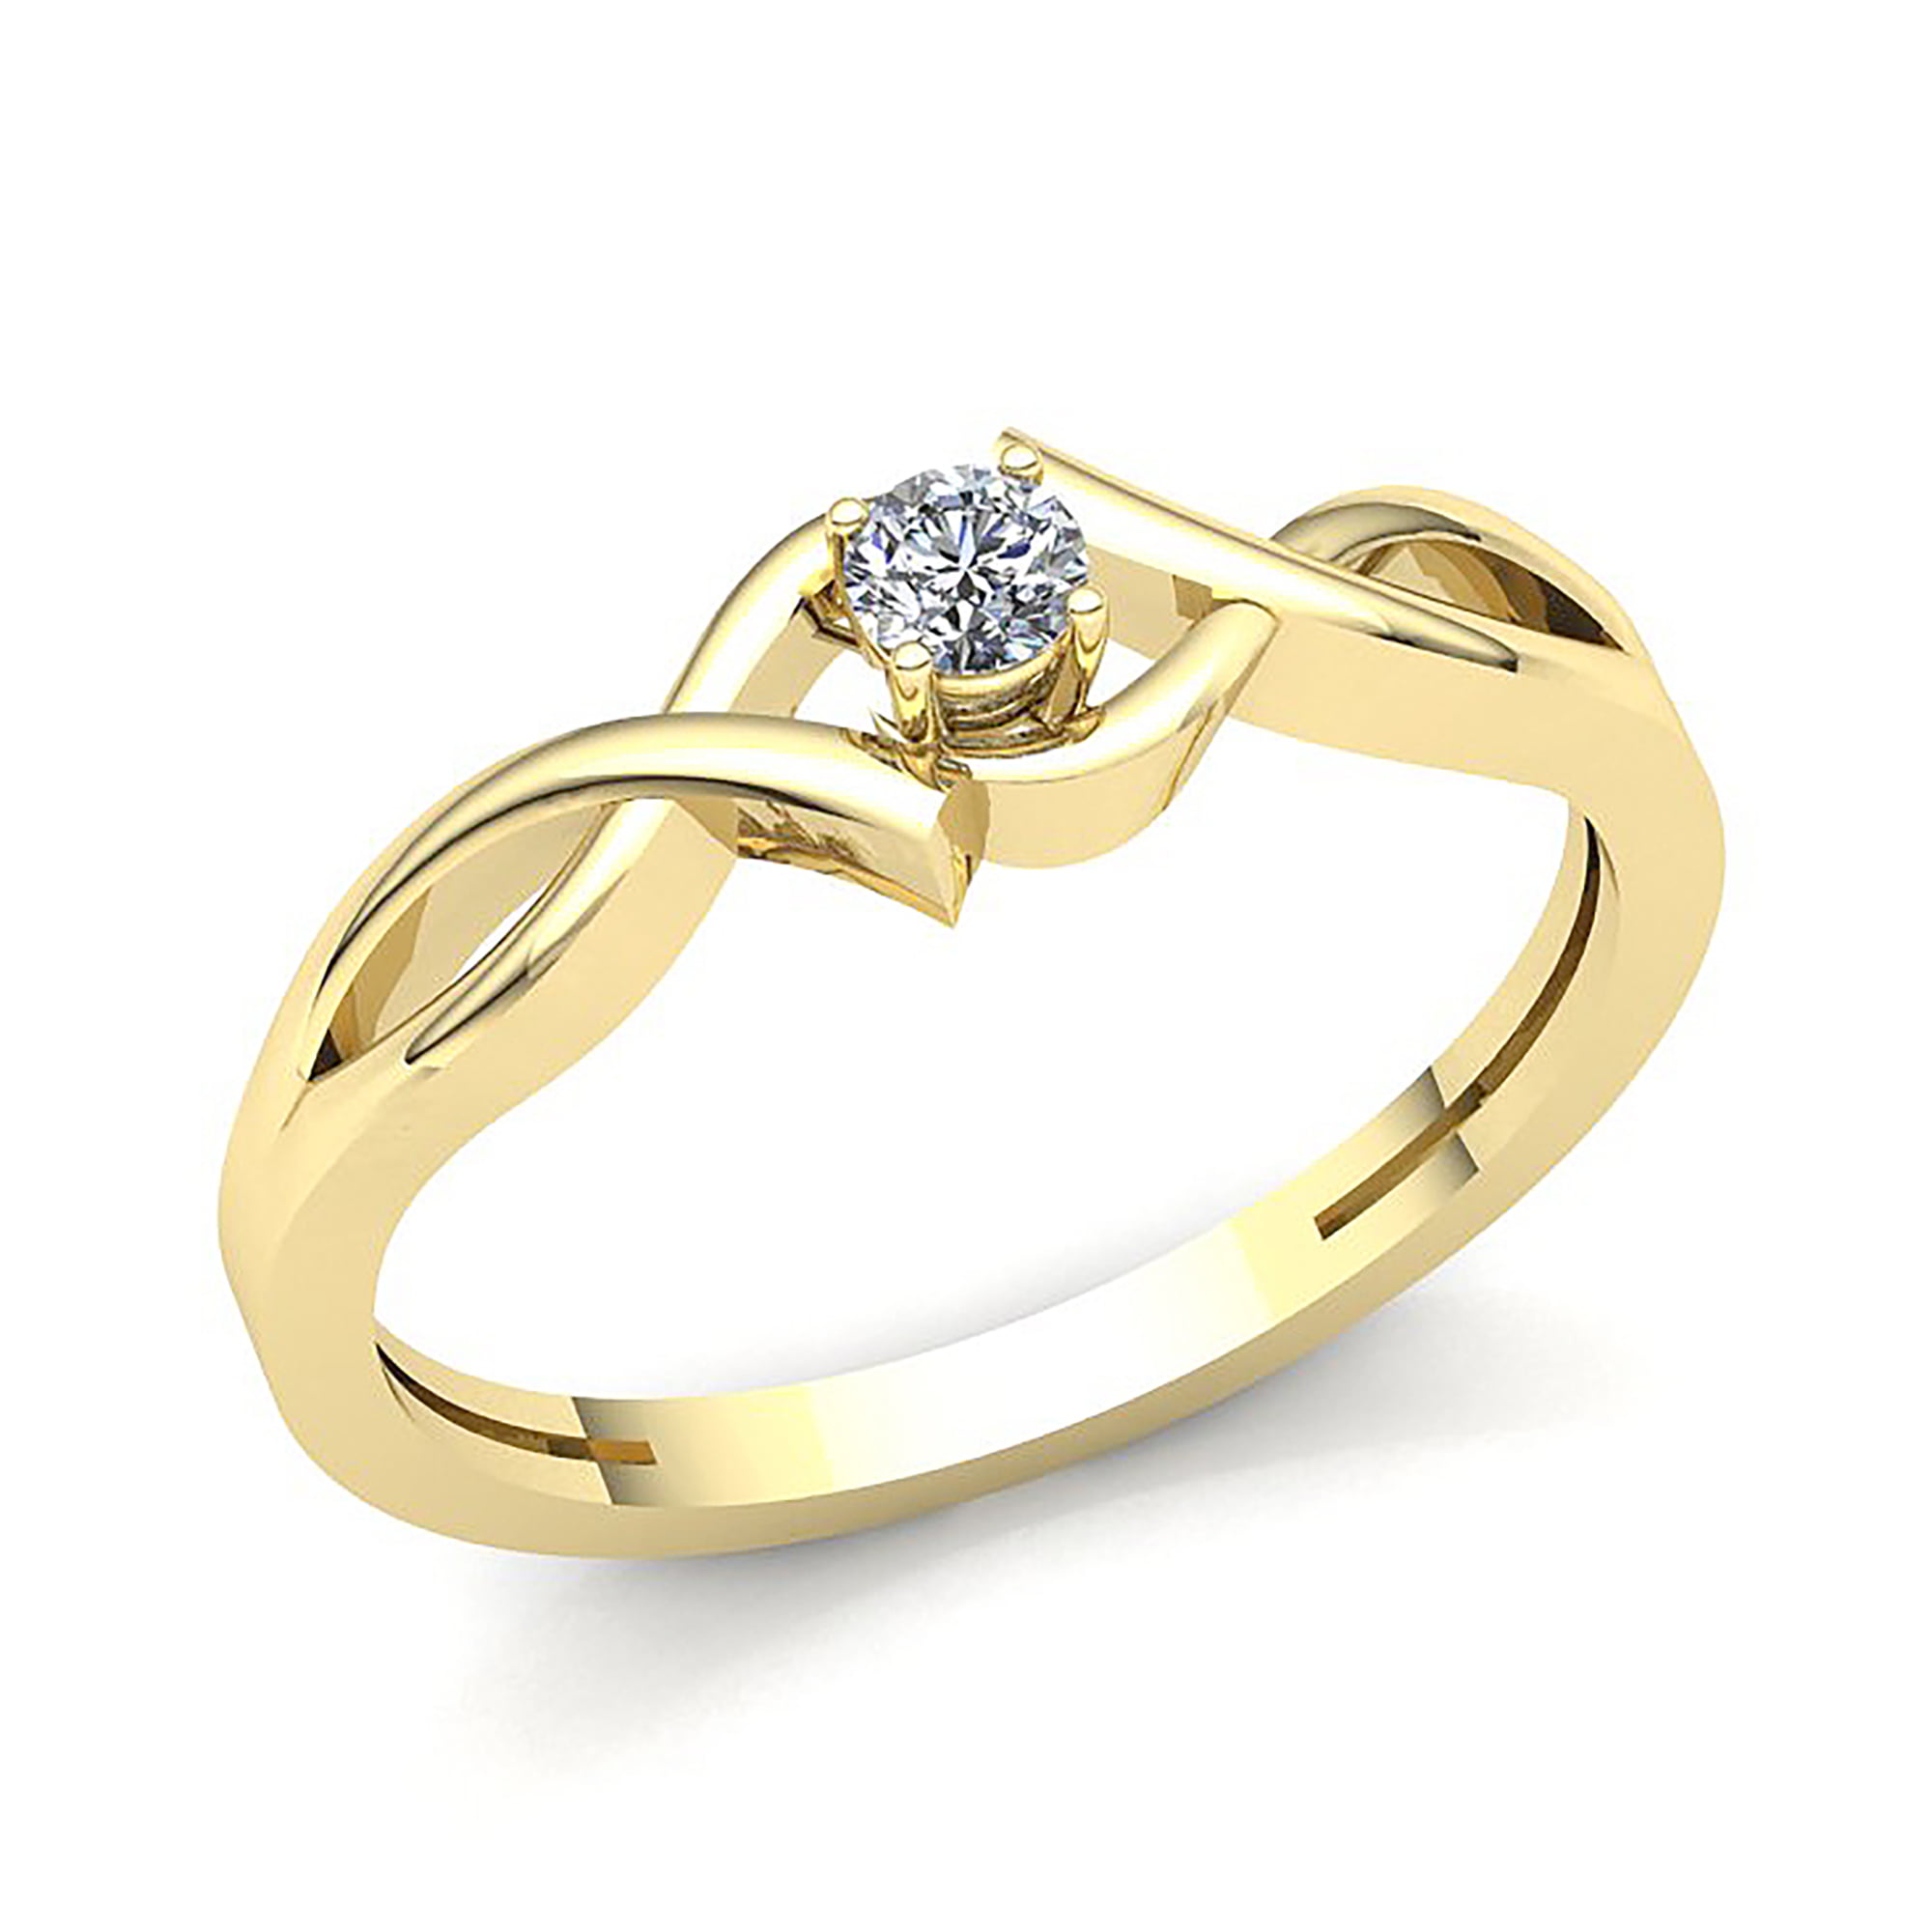 Natural Diamond Wedding Ring 14K Solid Gold Ring For Women Valentine Gift.  | eBay